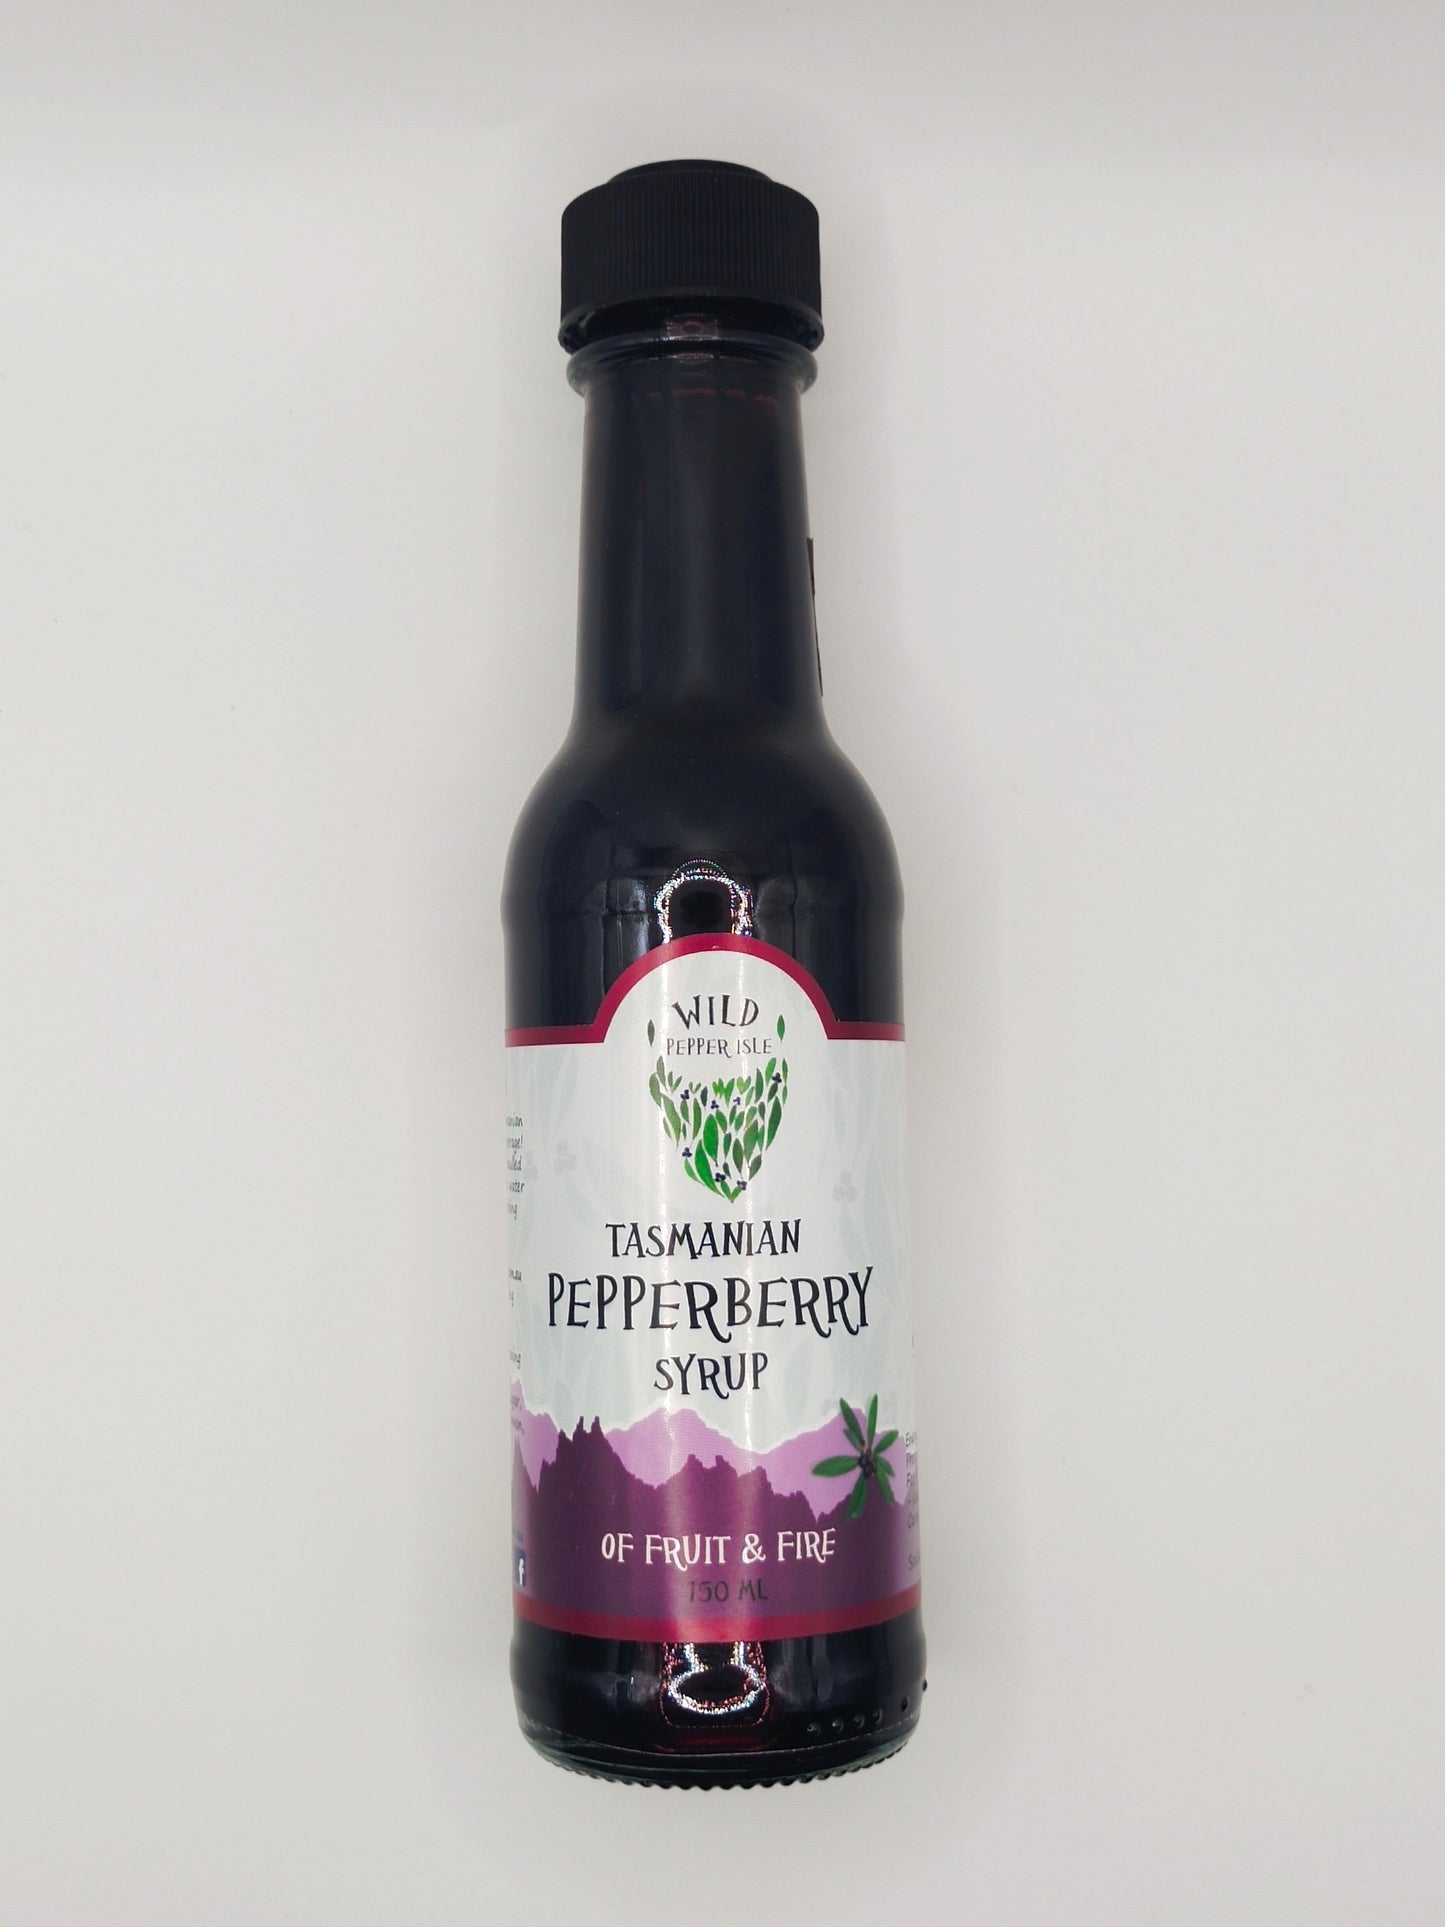 Wild Pepper Isle - Tasmanian Pepperberry Syrup